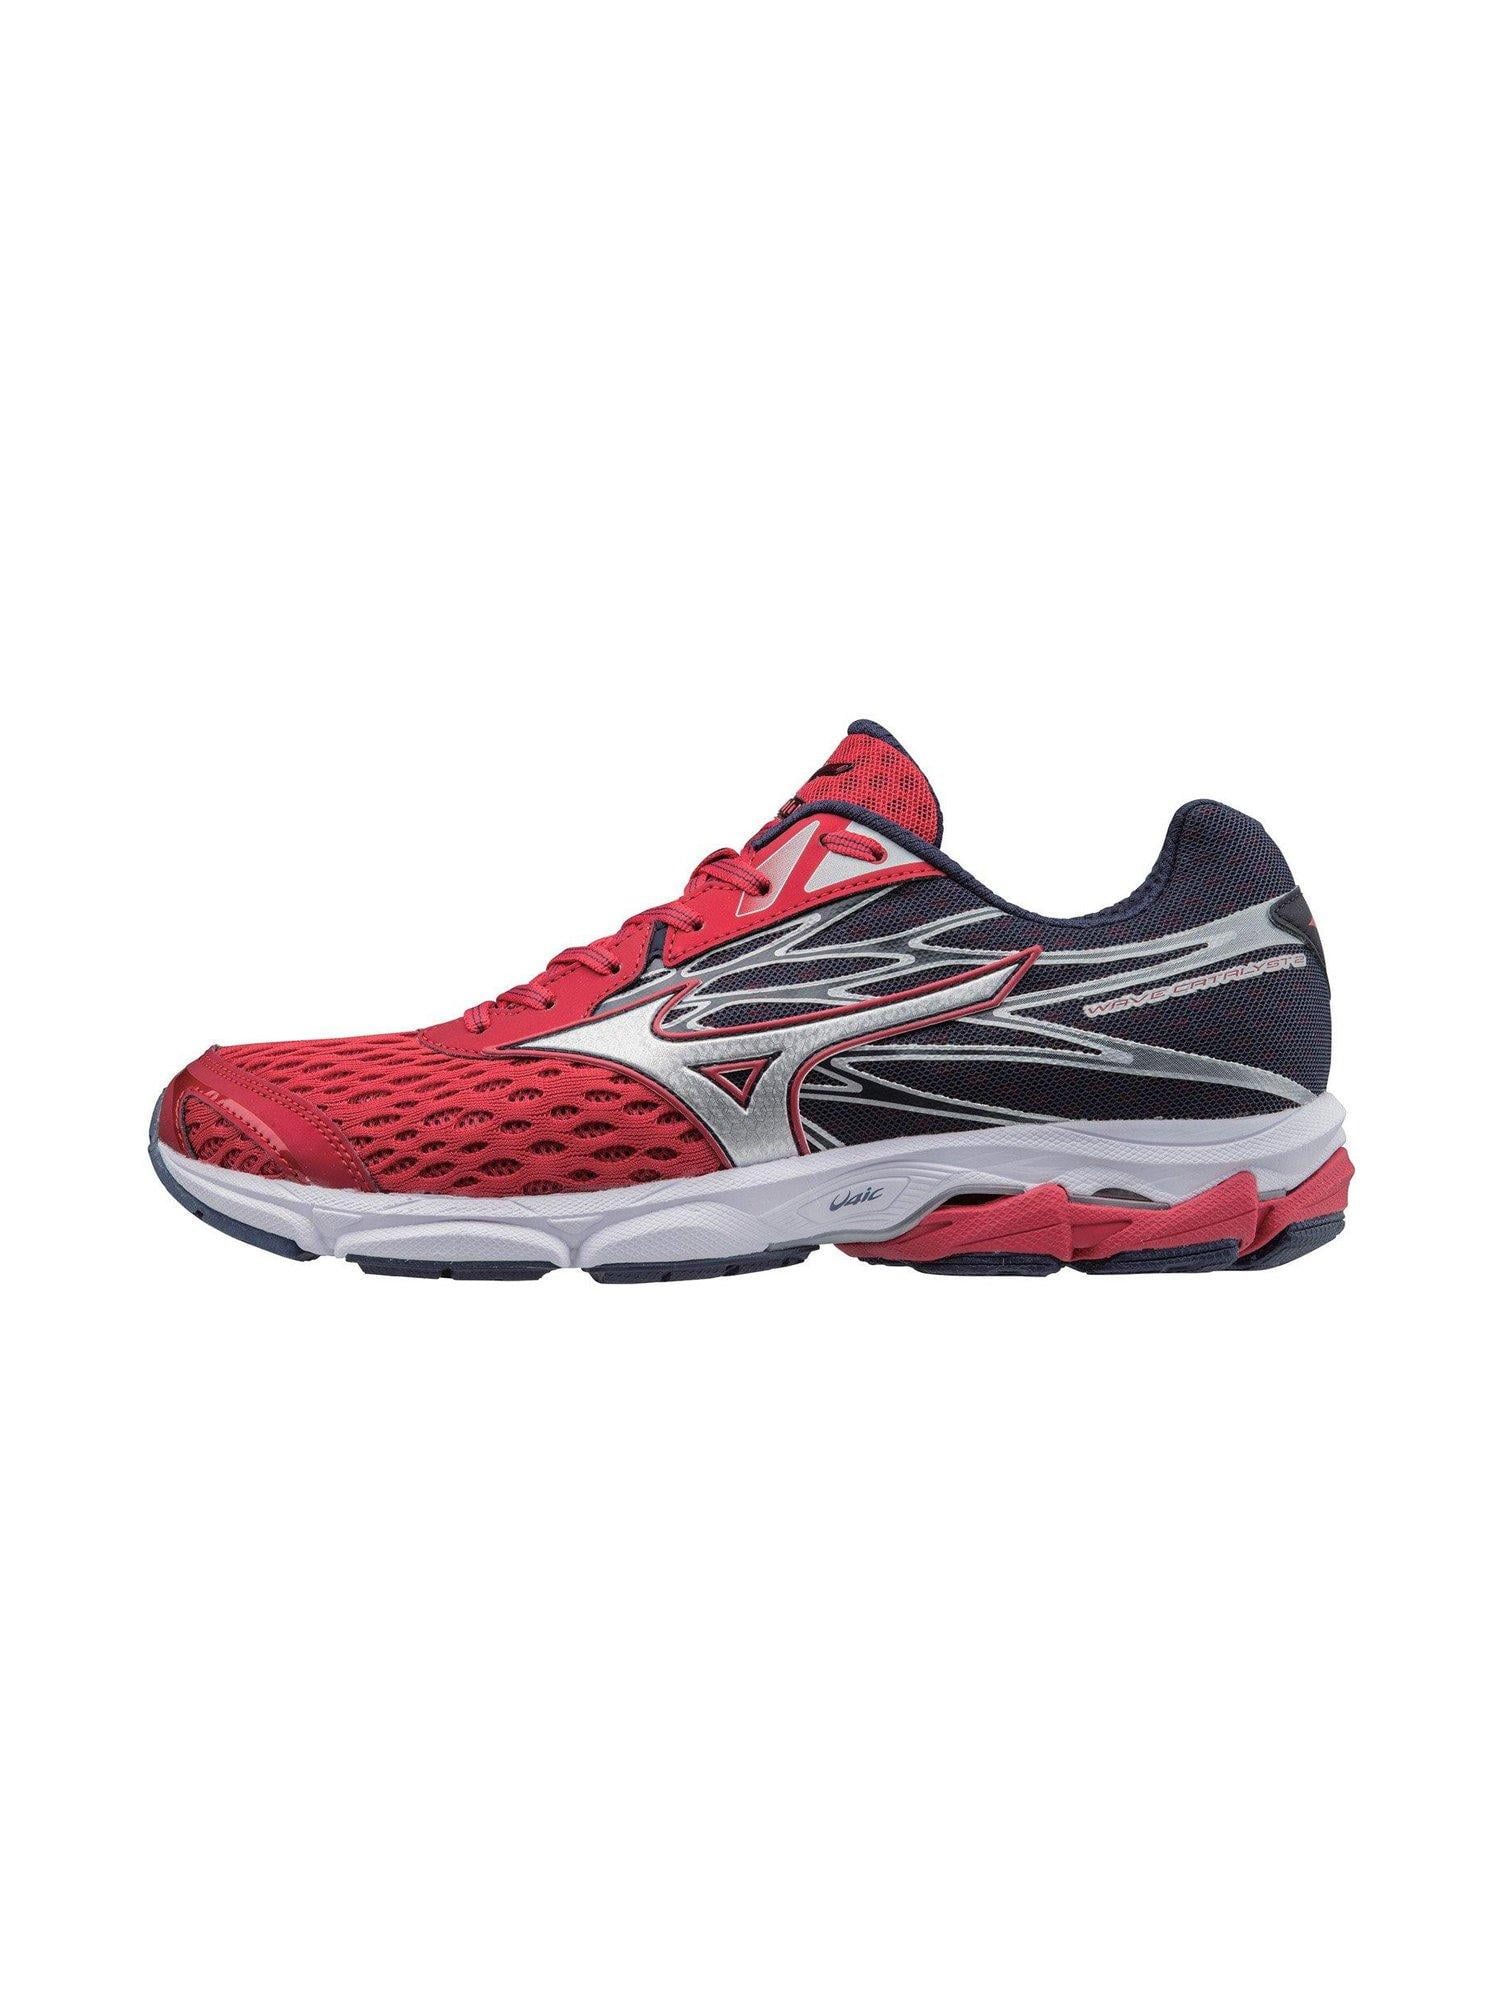 New Originals Women's Running shoes Mizuno Wave Catalyst 2 Grey Coral sz 